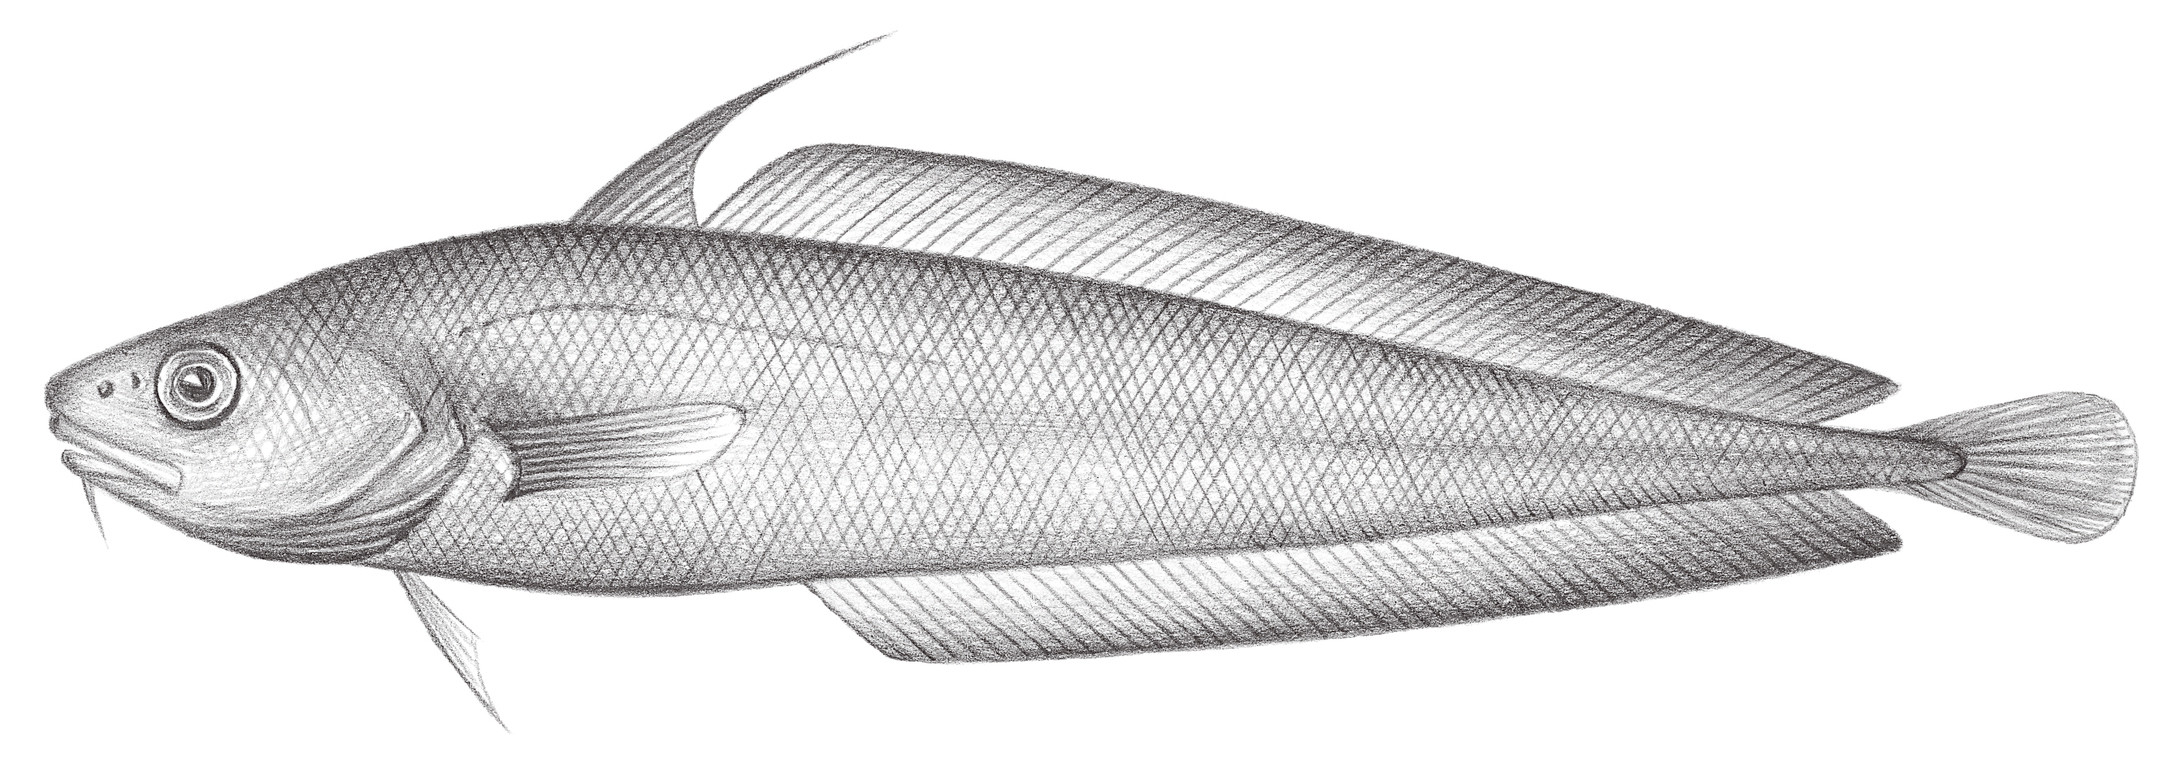 608.	紅小褐鱈 Physiculus roseus Alcock, 1891